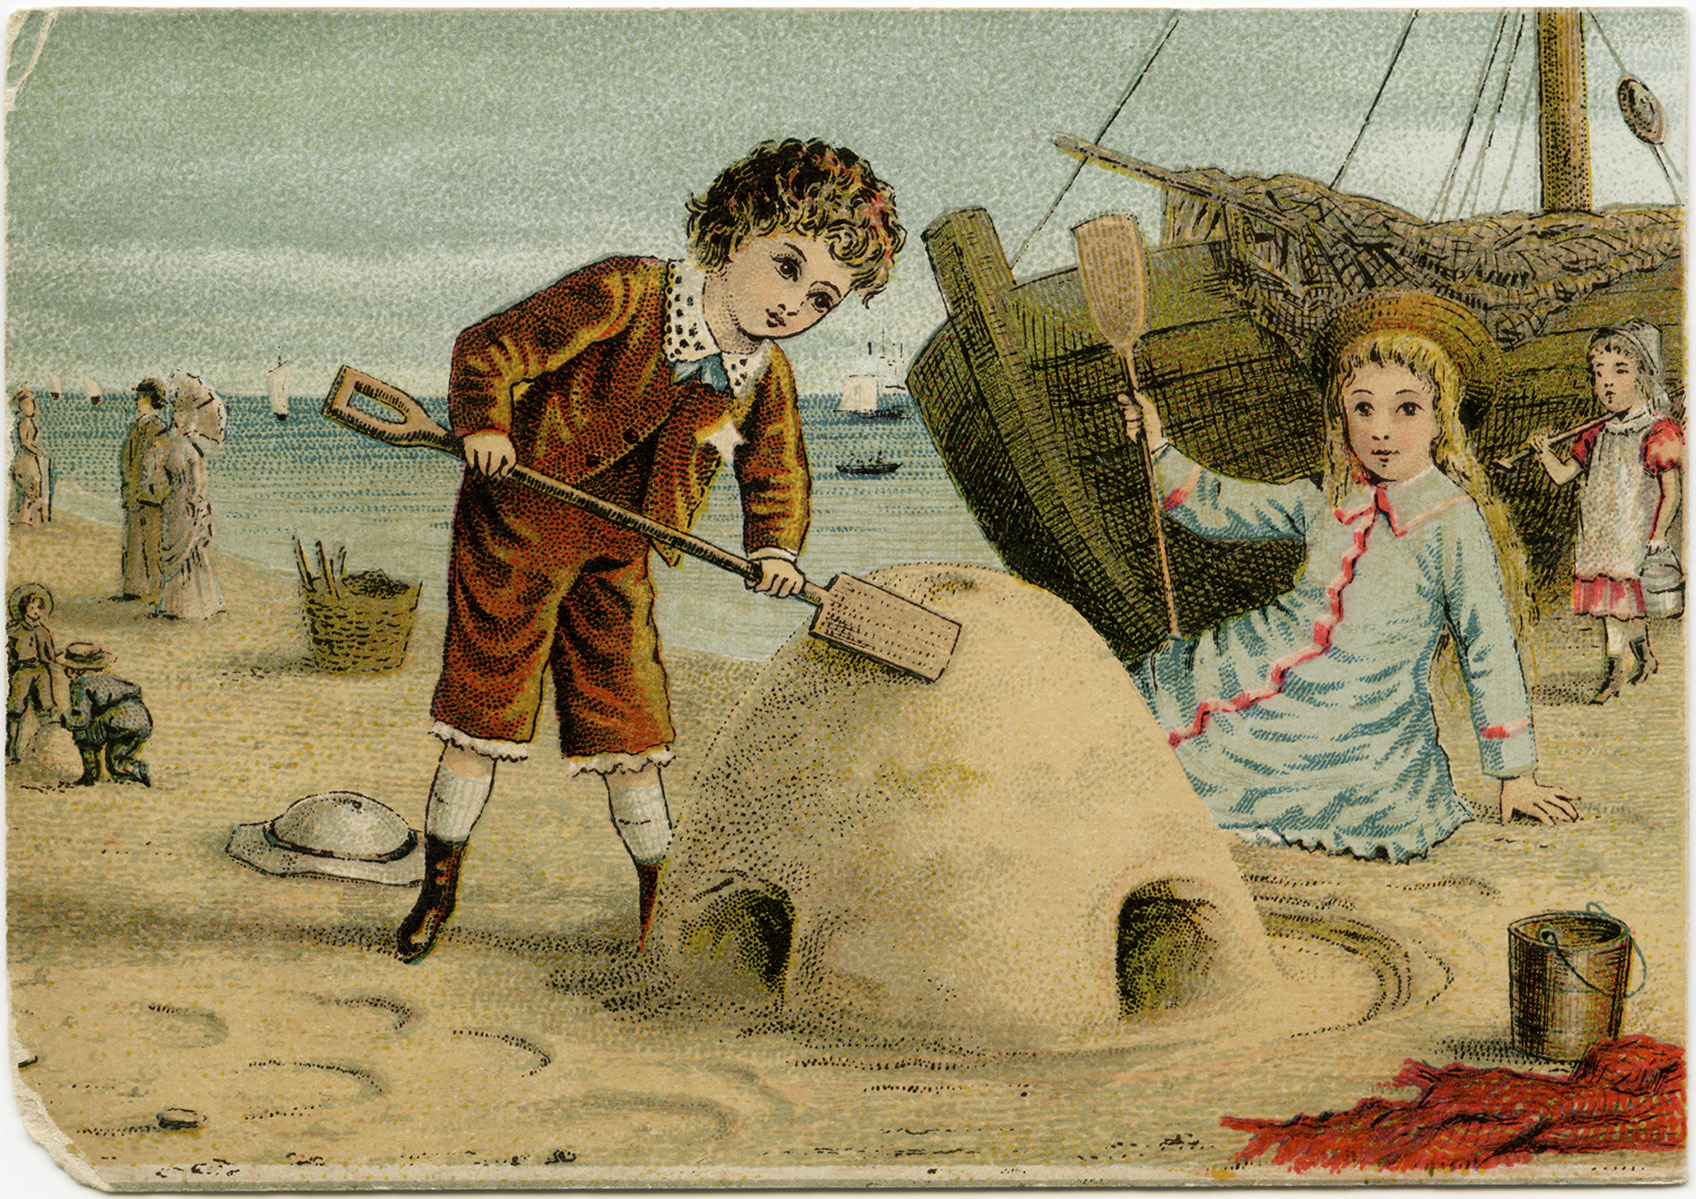 victorian beach scene, children build sand castle, vintage summer clipart, old fashioned beach image, antique printable card kids